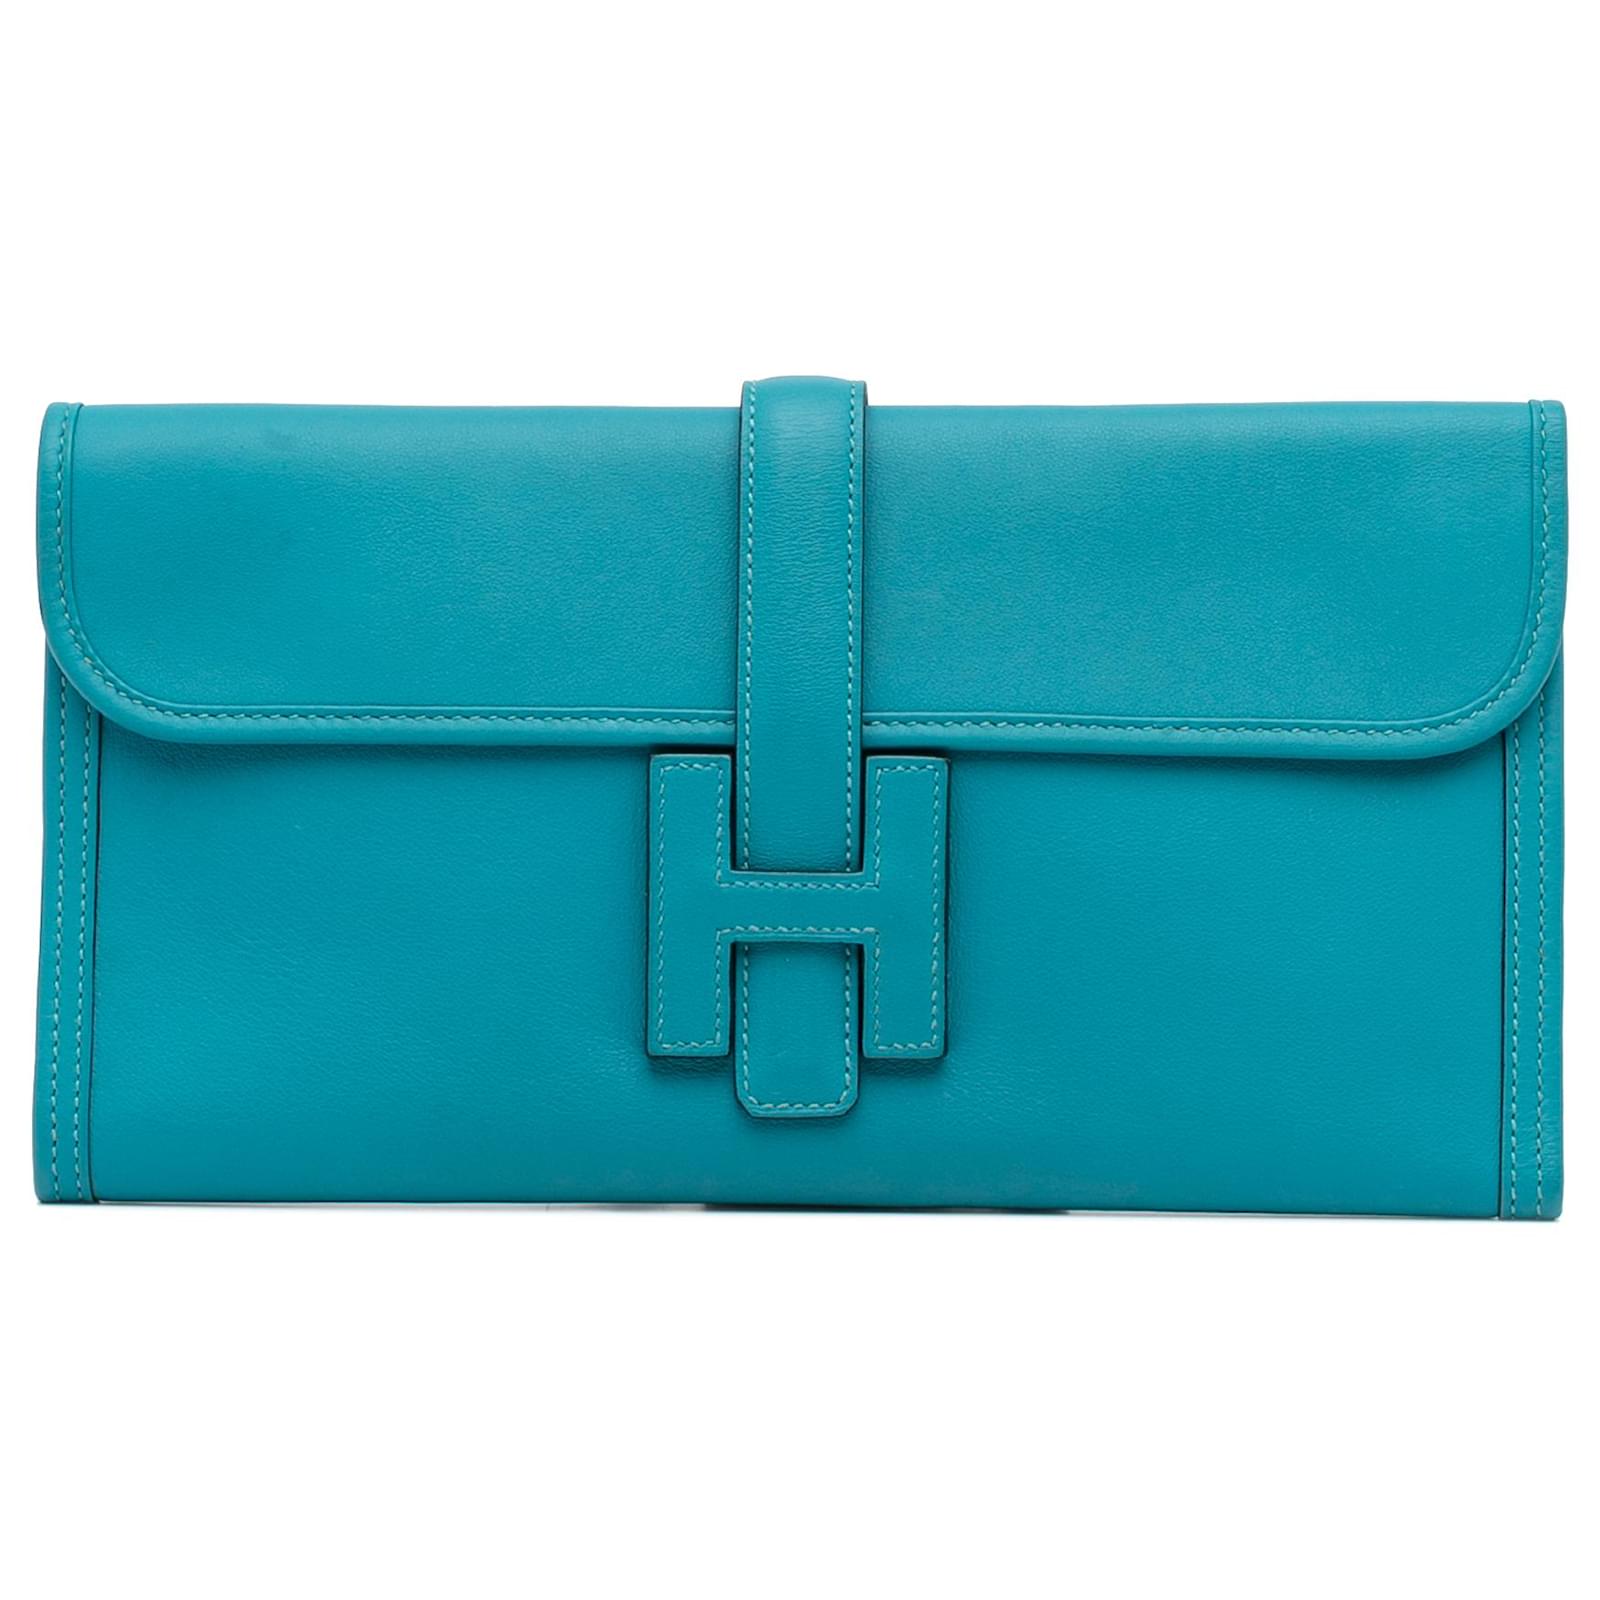 Hermes Swift Leather Jige 29 Clutch Bag